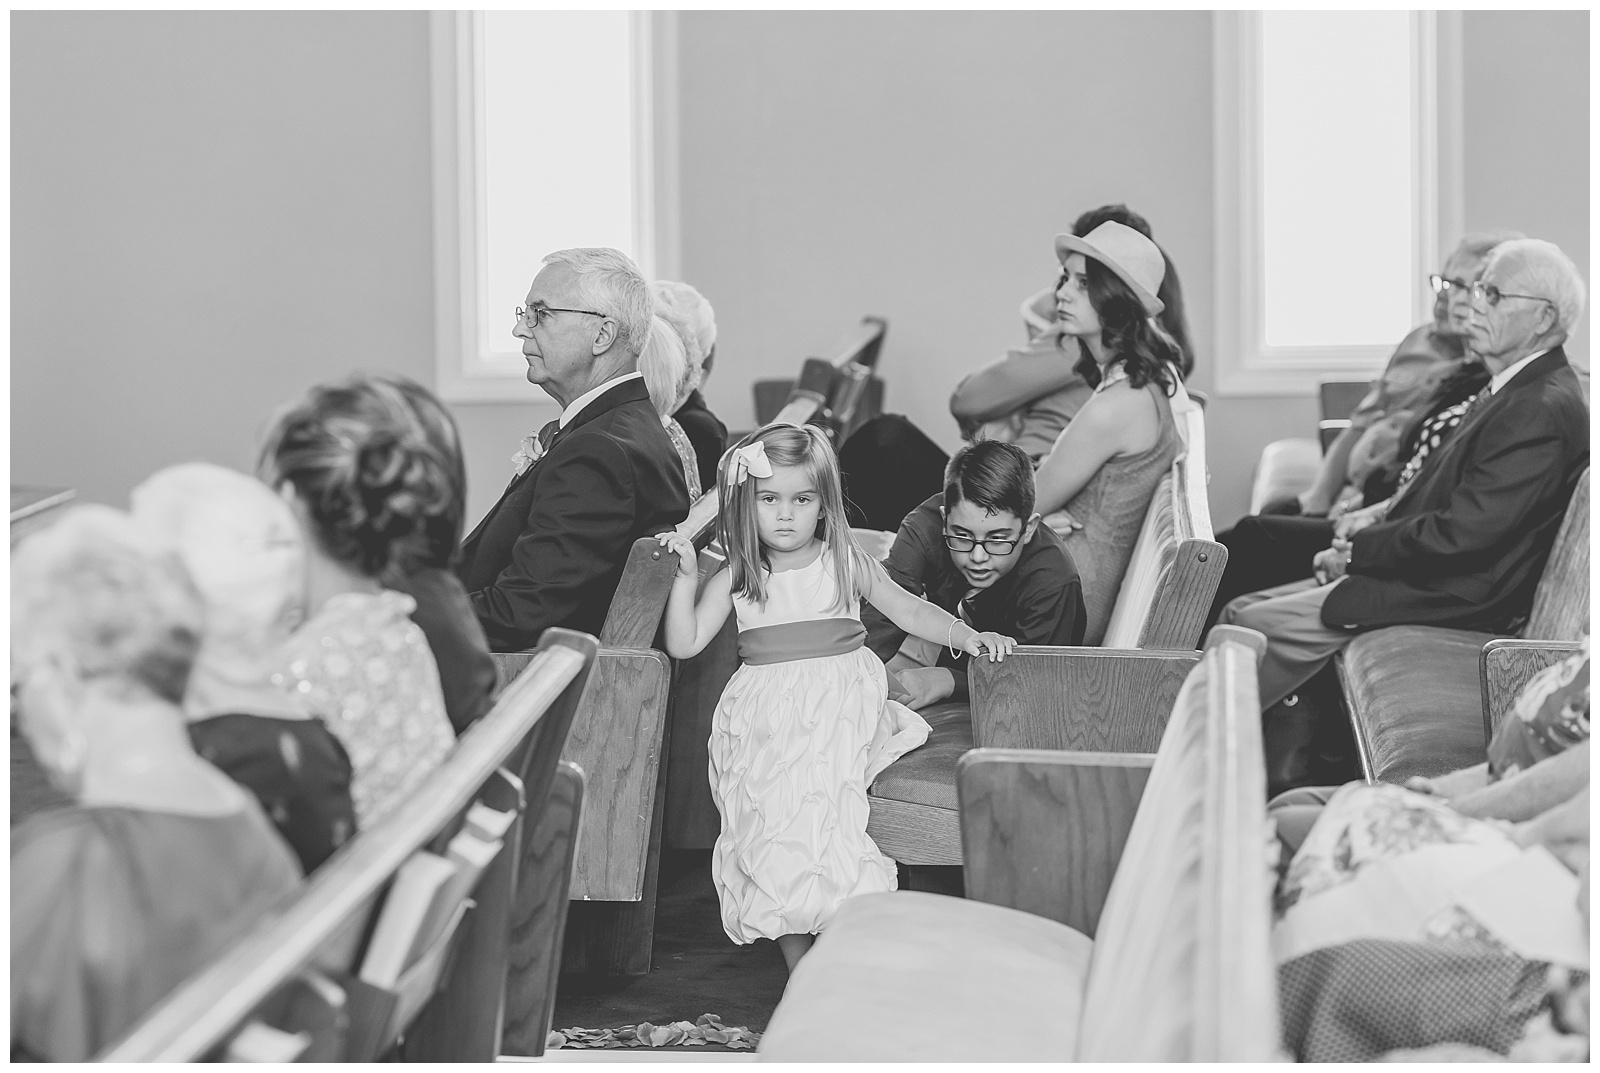 Wedding photography at South Knollwood Baptist Church in Topeka, Kansas.